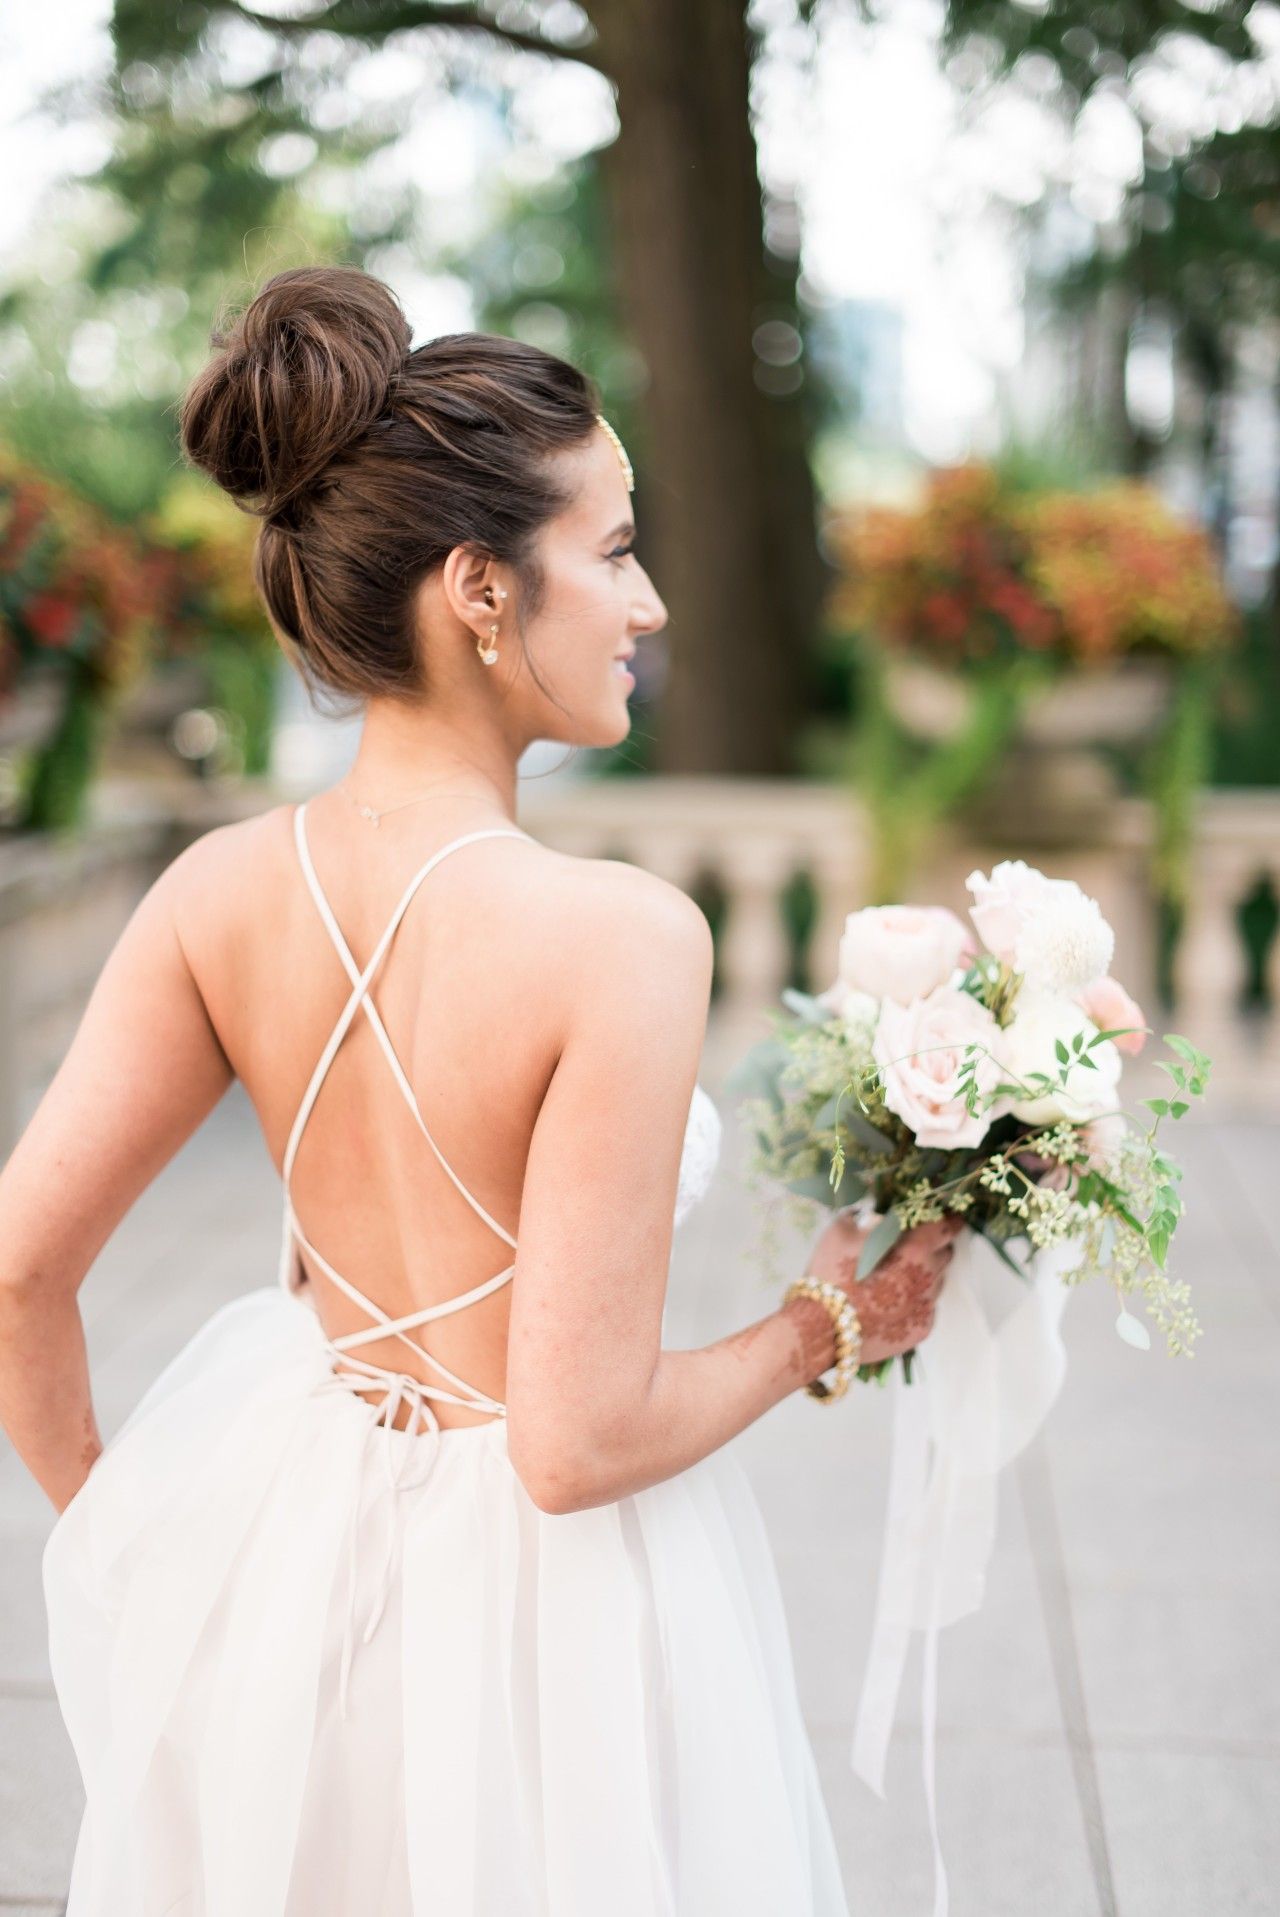 Wedding hairstyles & bridal hairstyles | Get inspired | ShoeStories